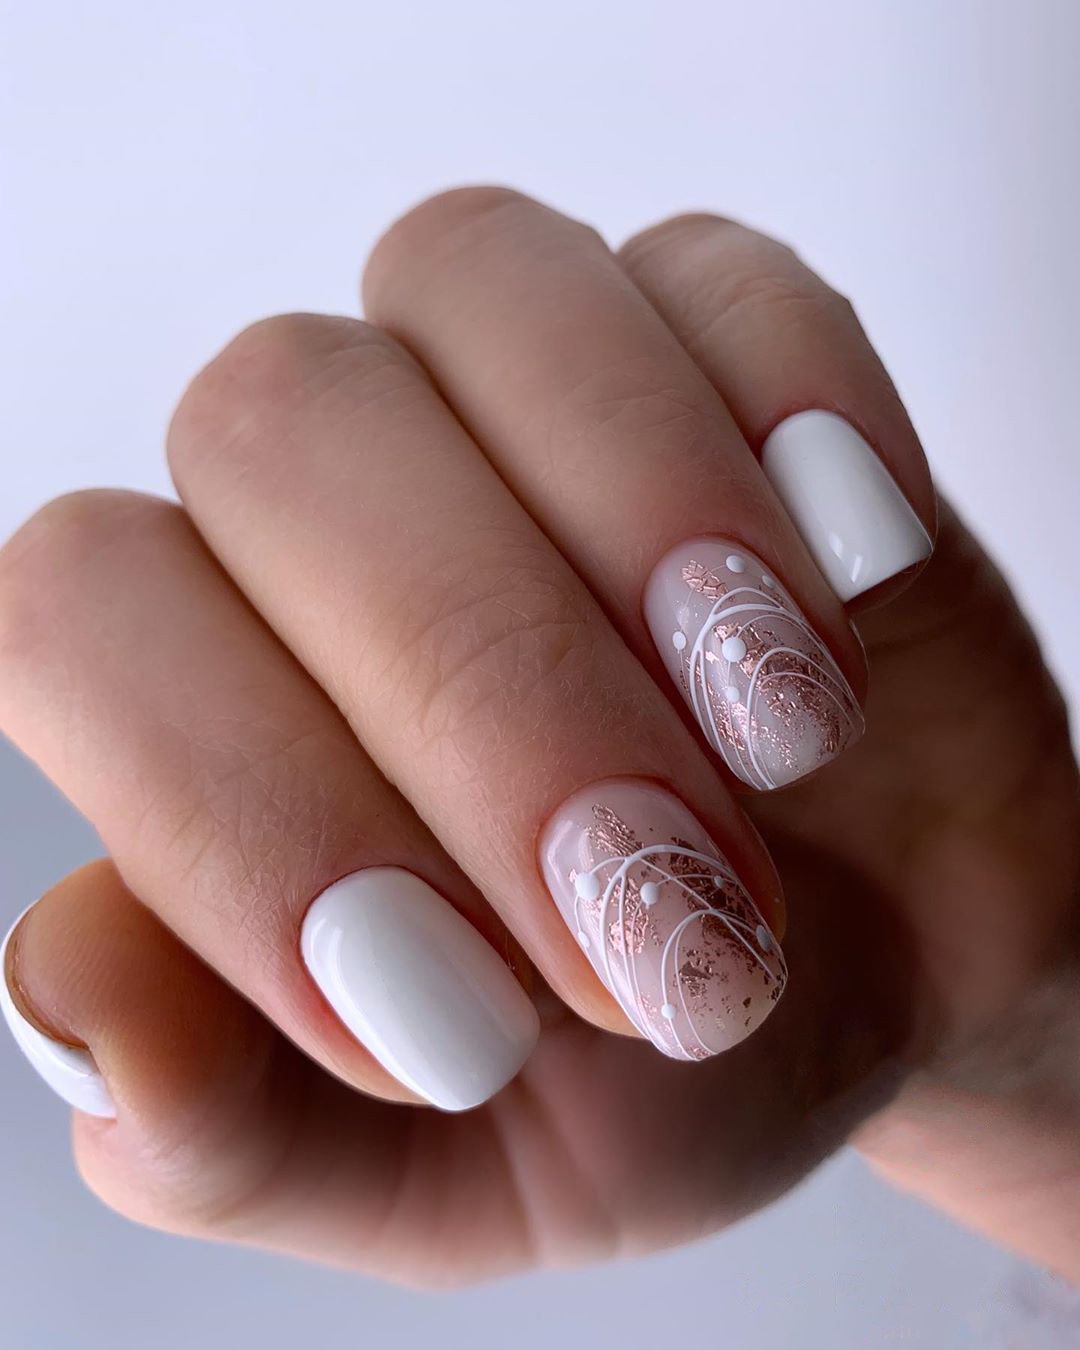 pink and white nails wedding beauty foil dots abstract sobakar_nails